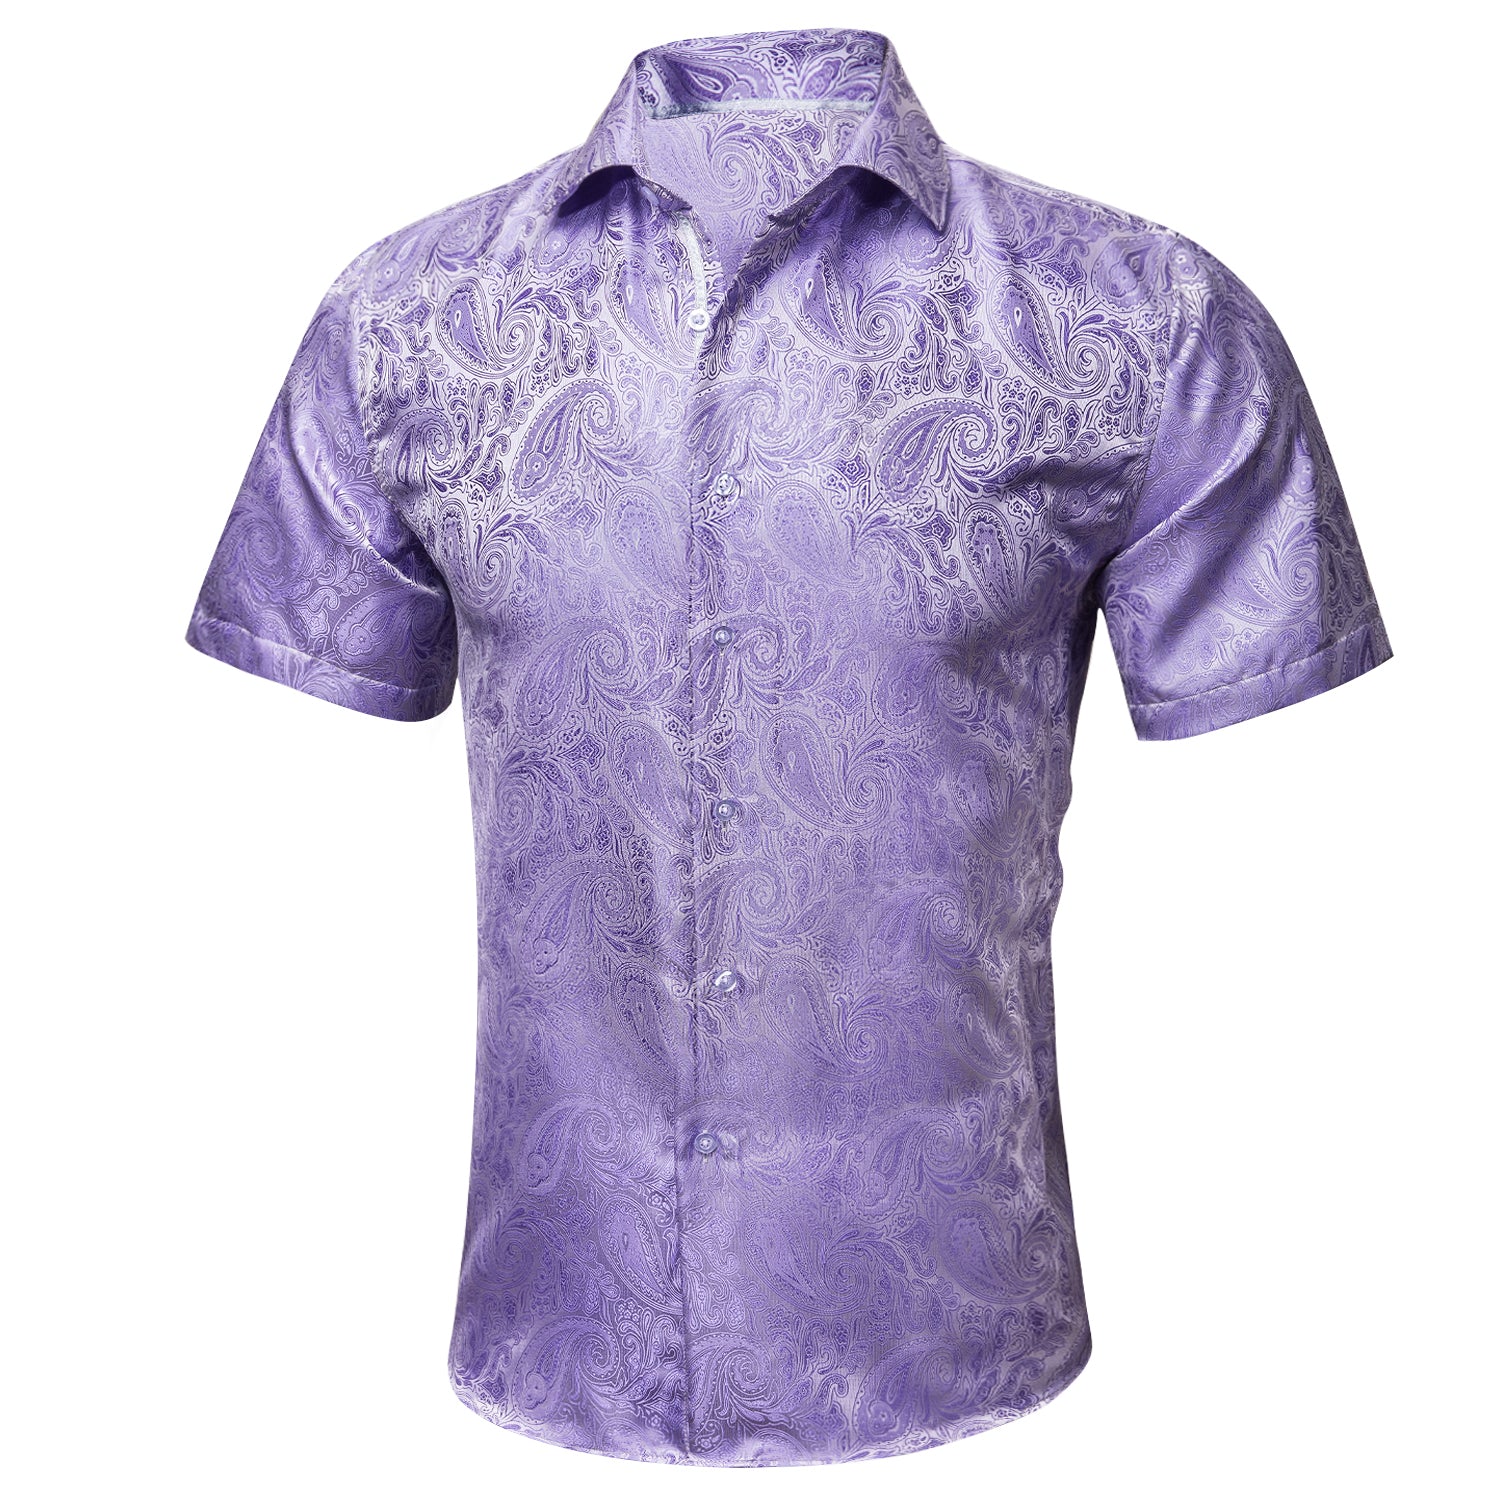 Barry.wang Purple Paisley Short Sleeves Silk Shirt